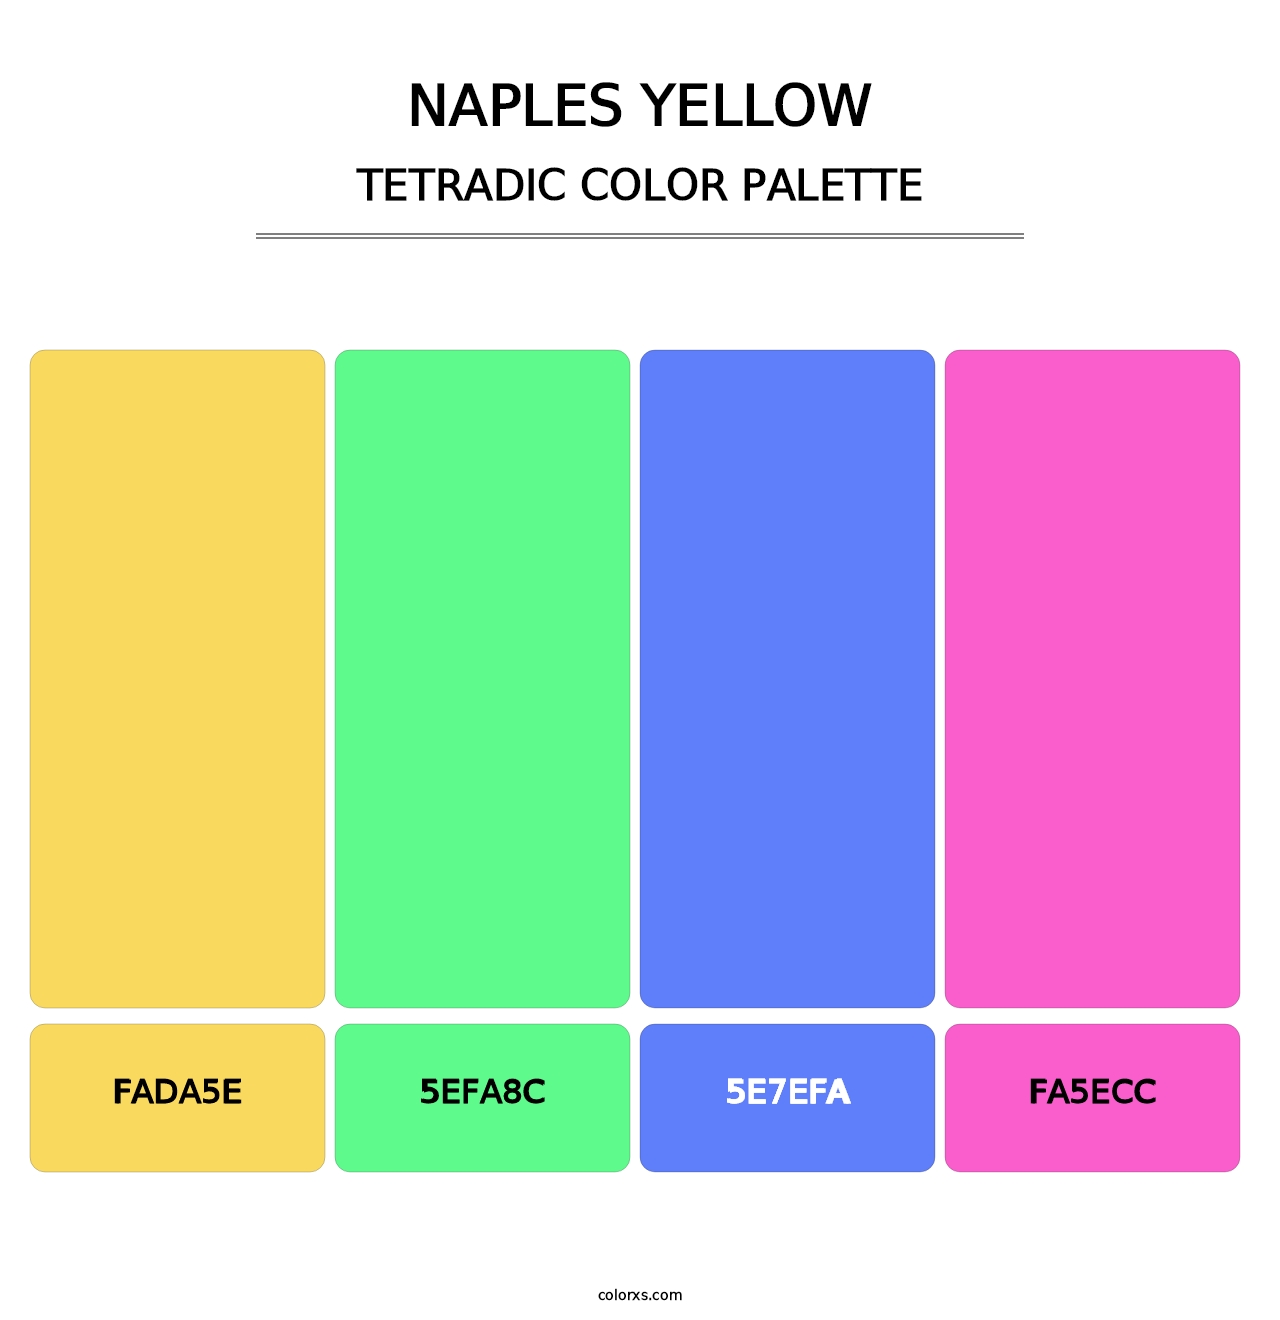 Naples Yellow - Tetradic Color Palette